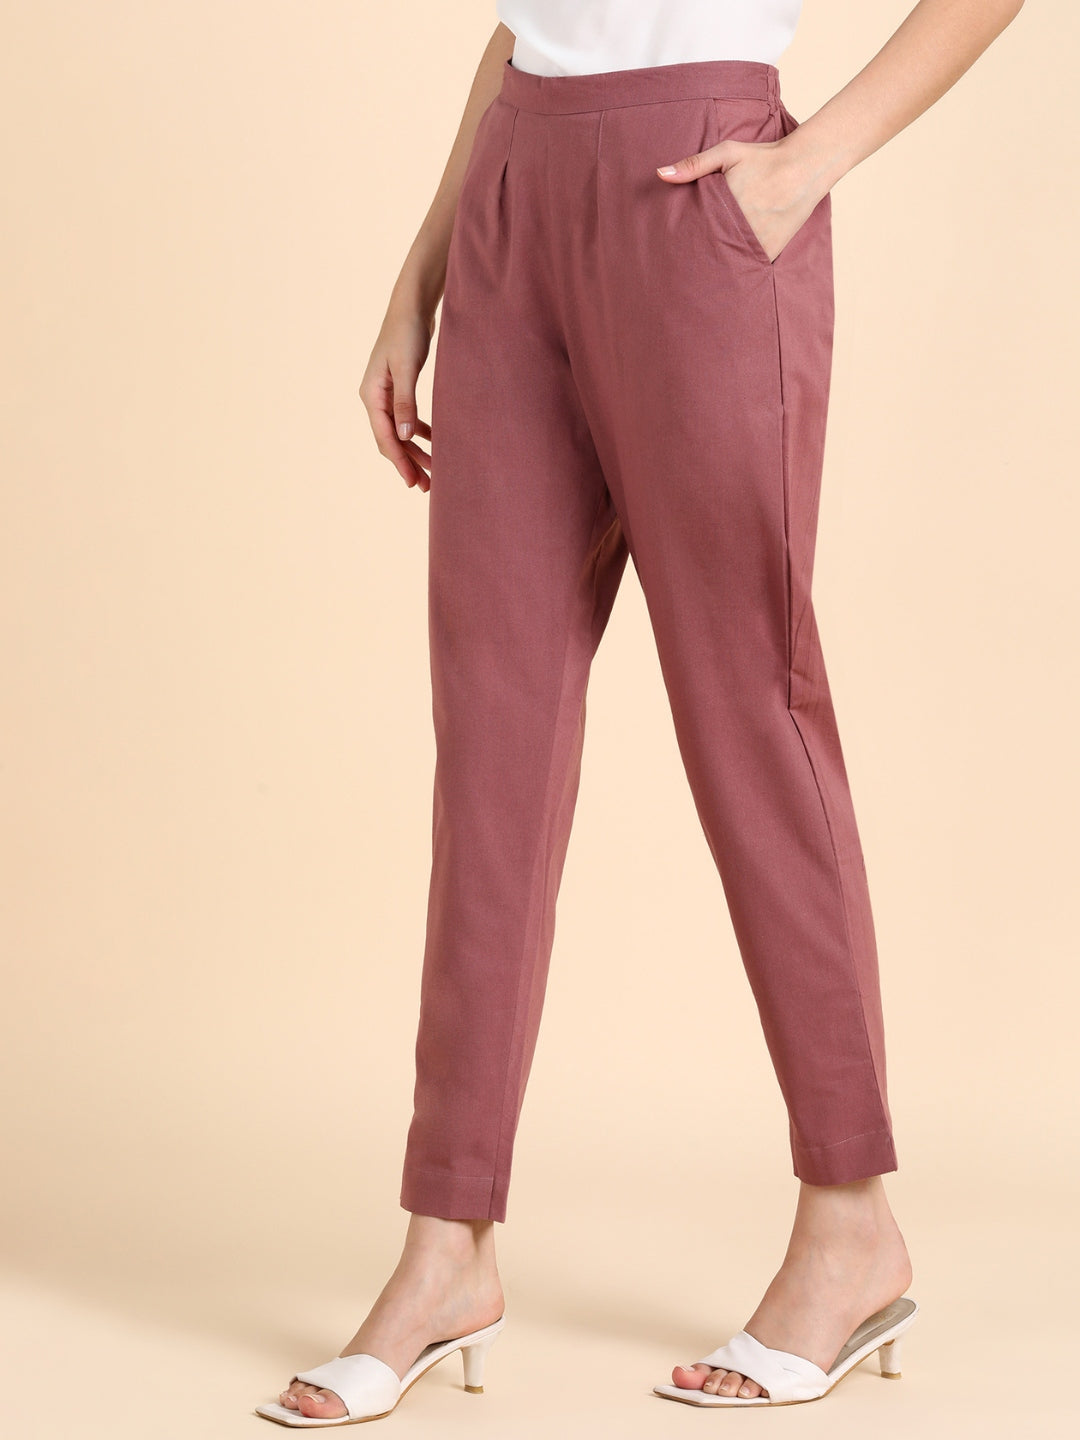 Soft Cotton Solid Color Pant - Rose Pink